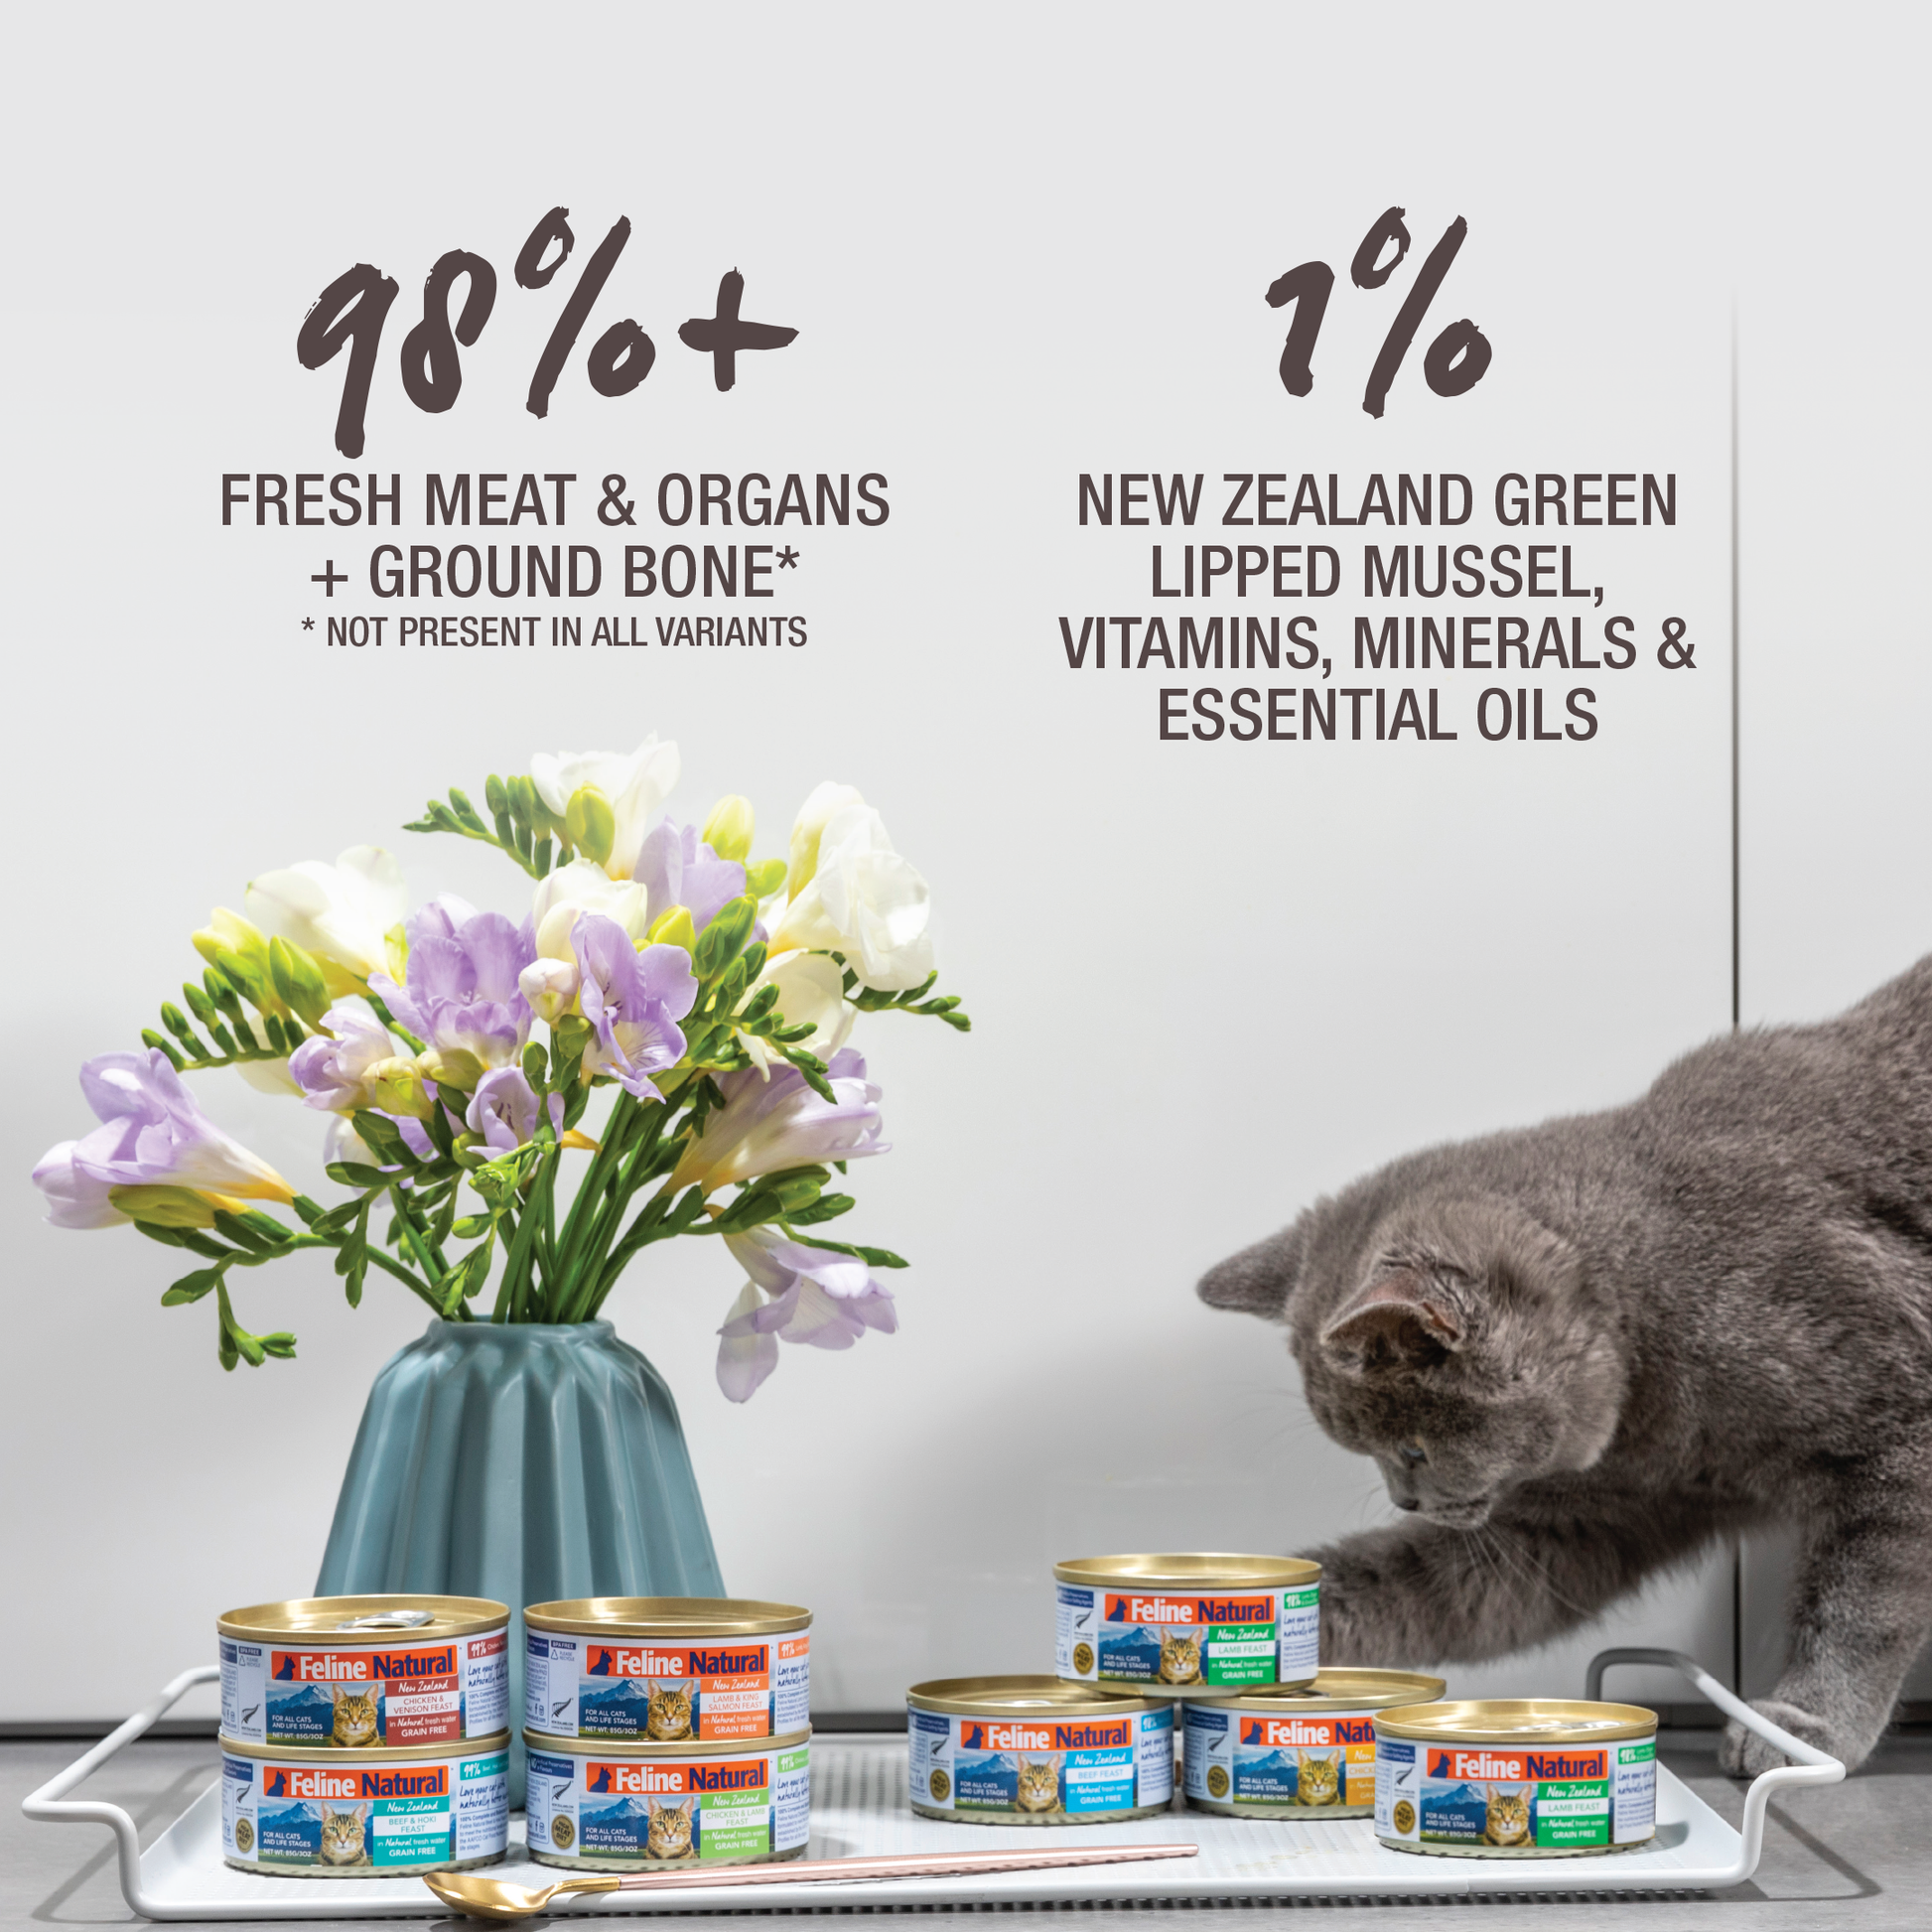 Feline Natural Lamb Feast Canned Cat Food 170G - ADS Pet Store